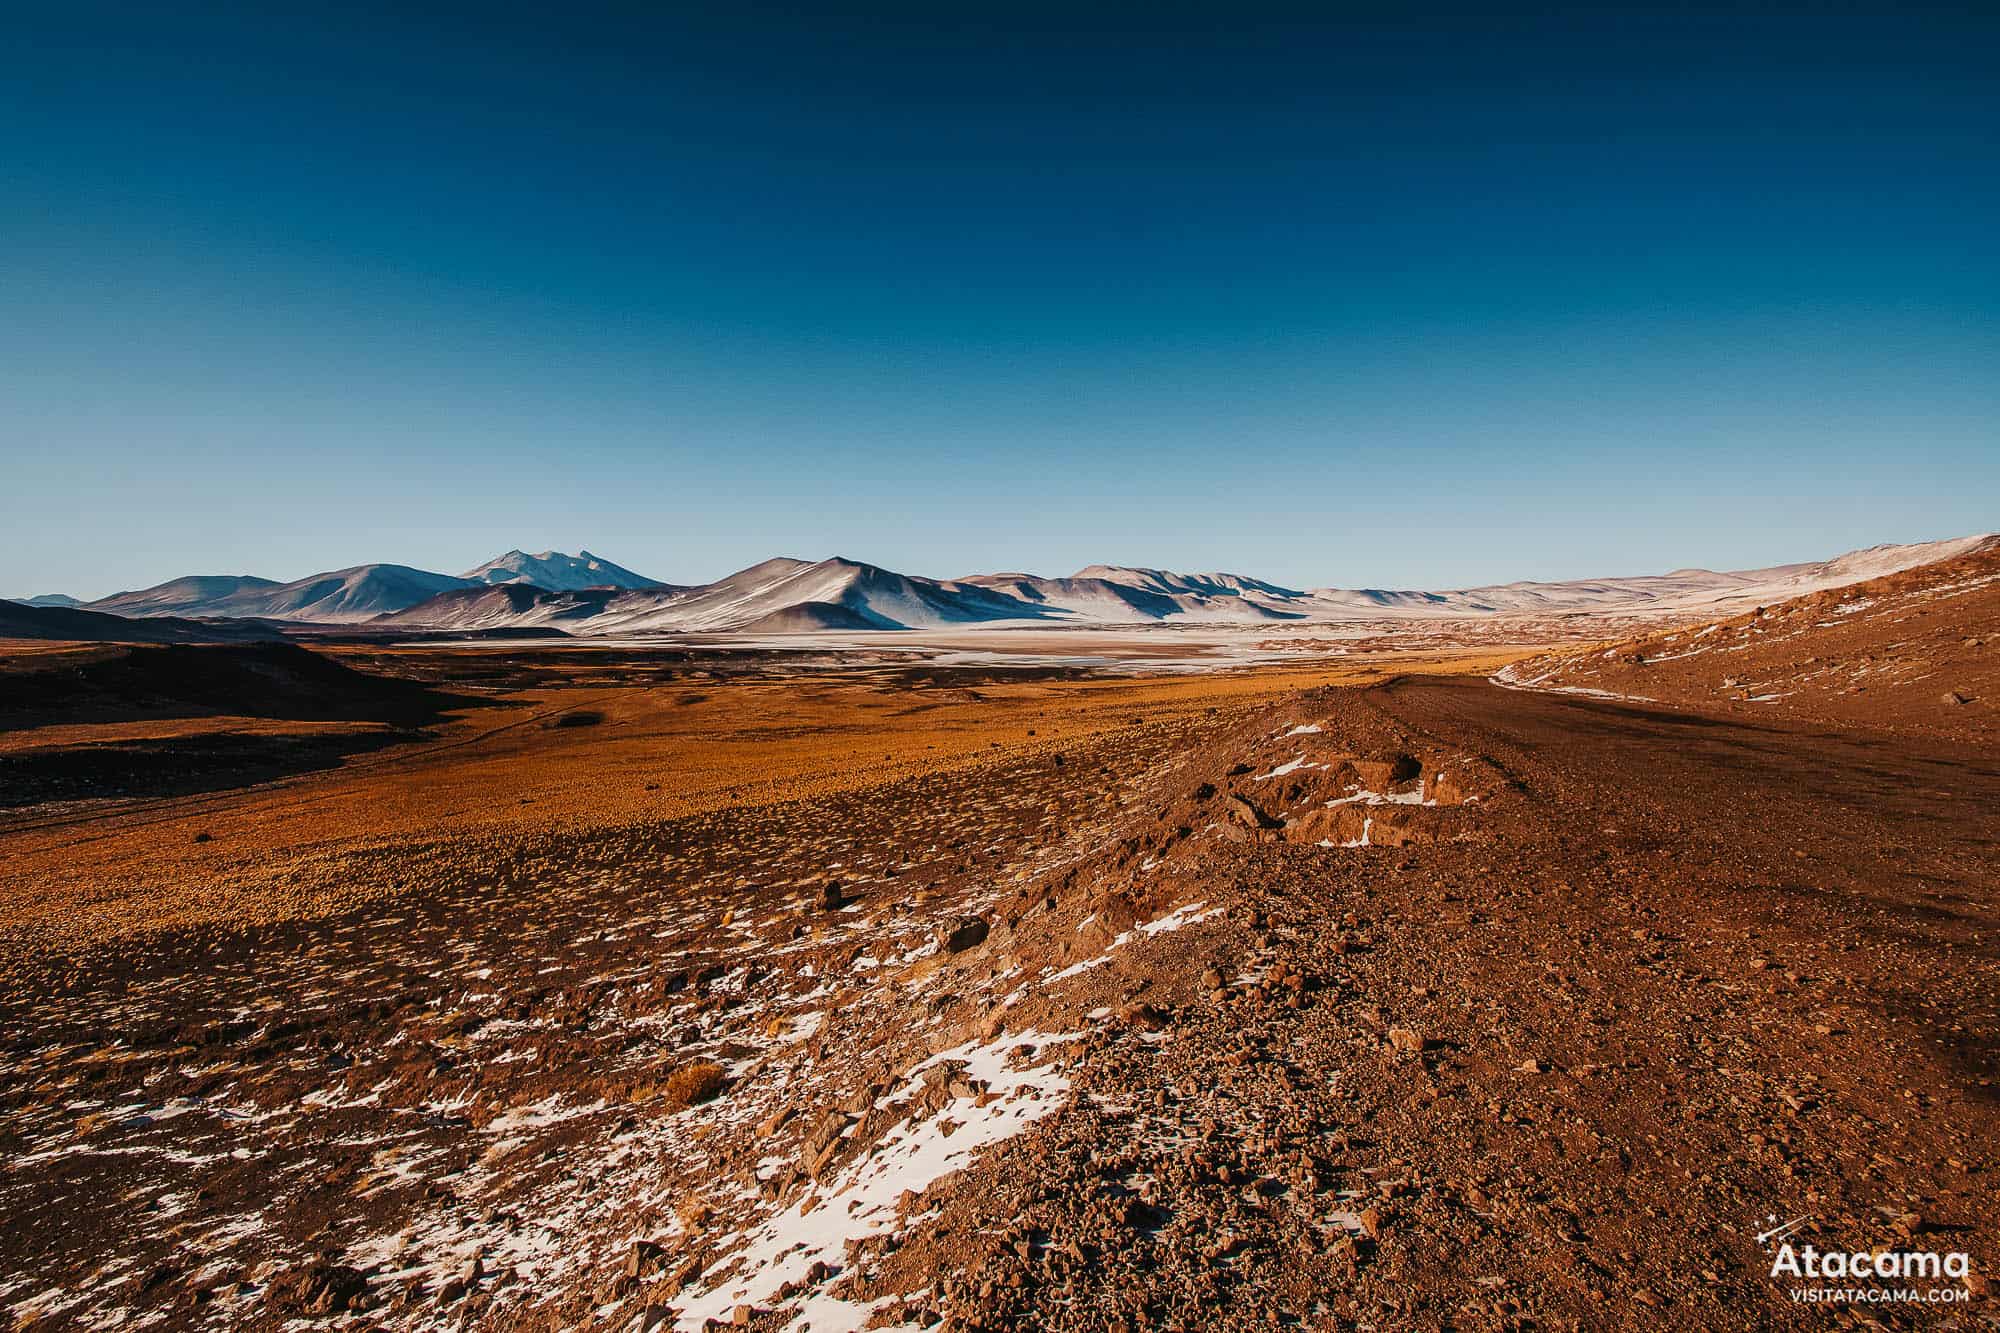 What to take to Atacama